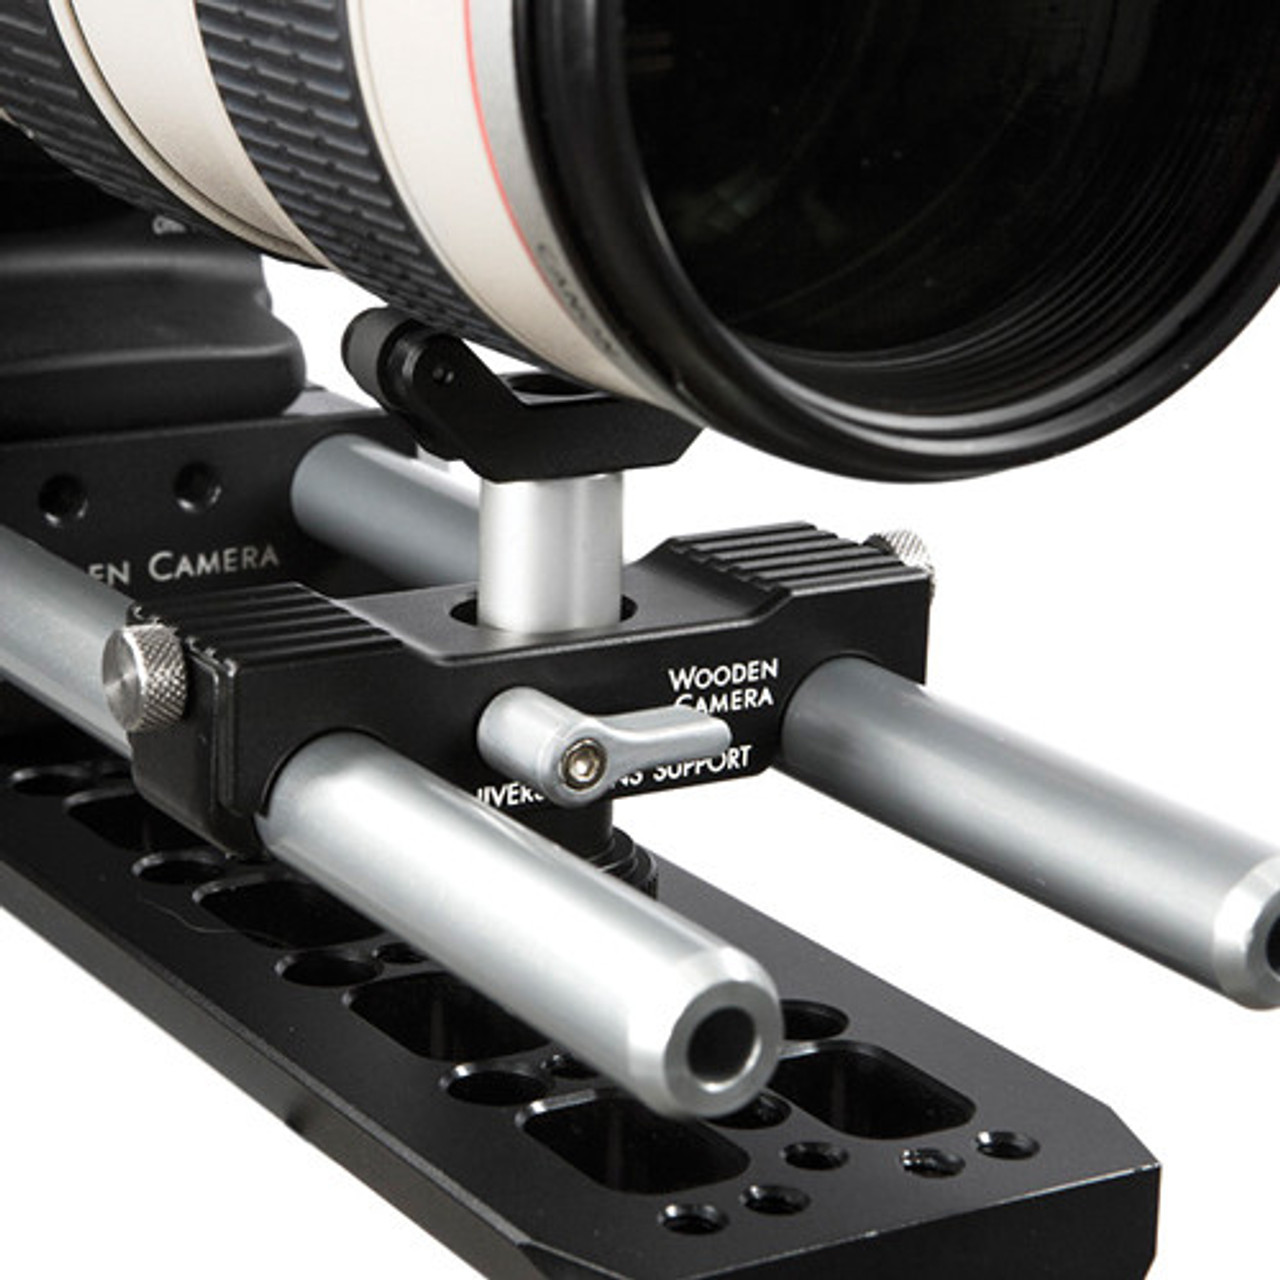 Universal Lens Support (19mm/15mm Studio) — Wooden Camera